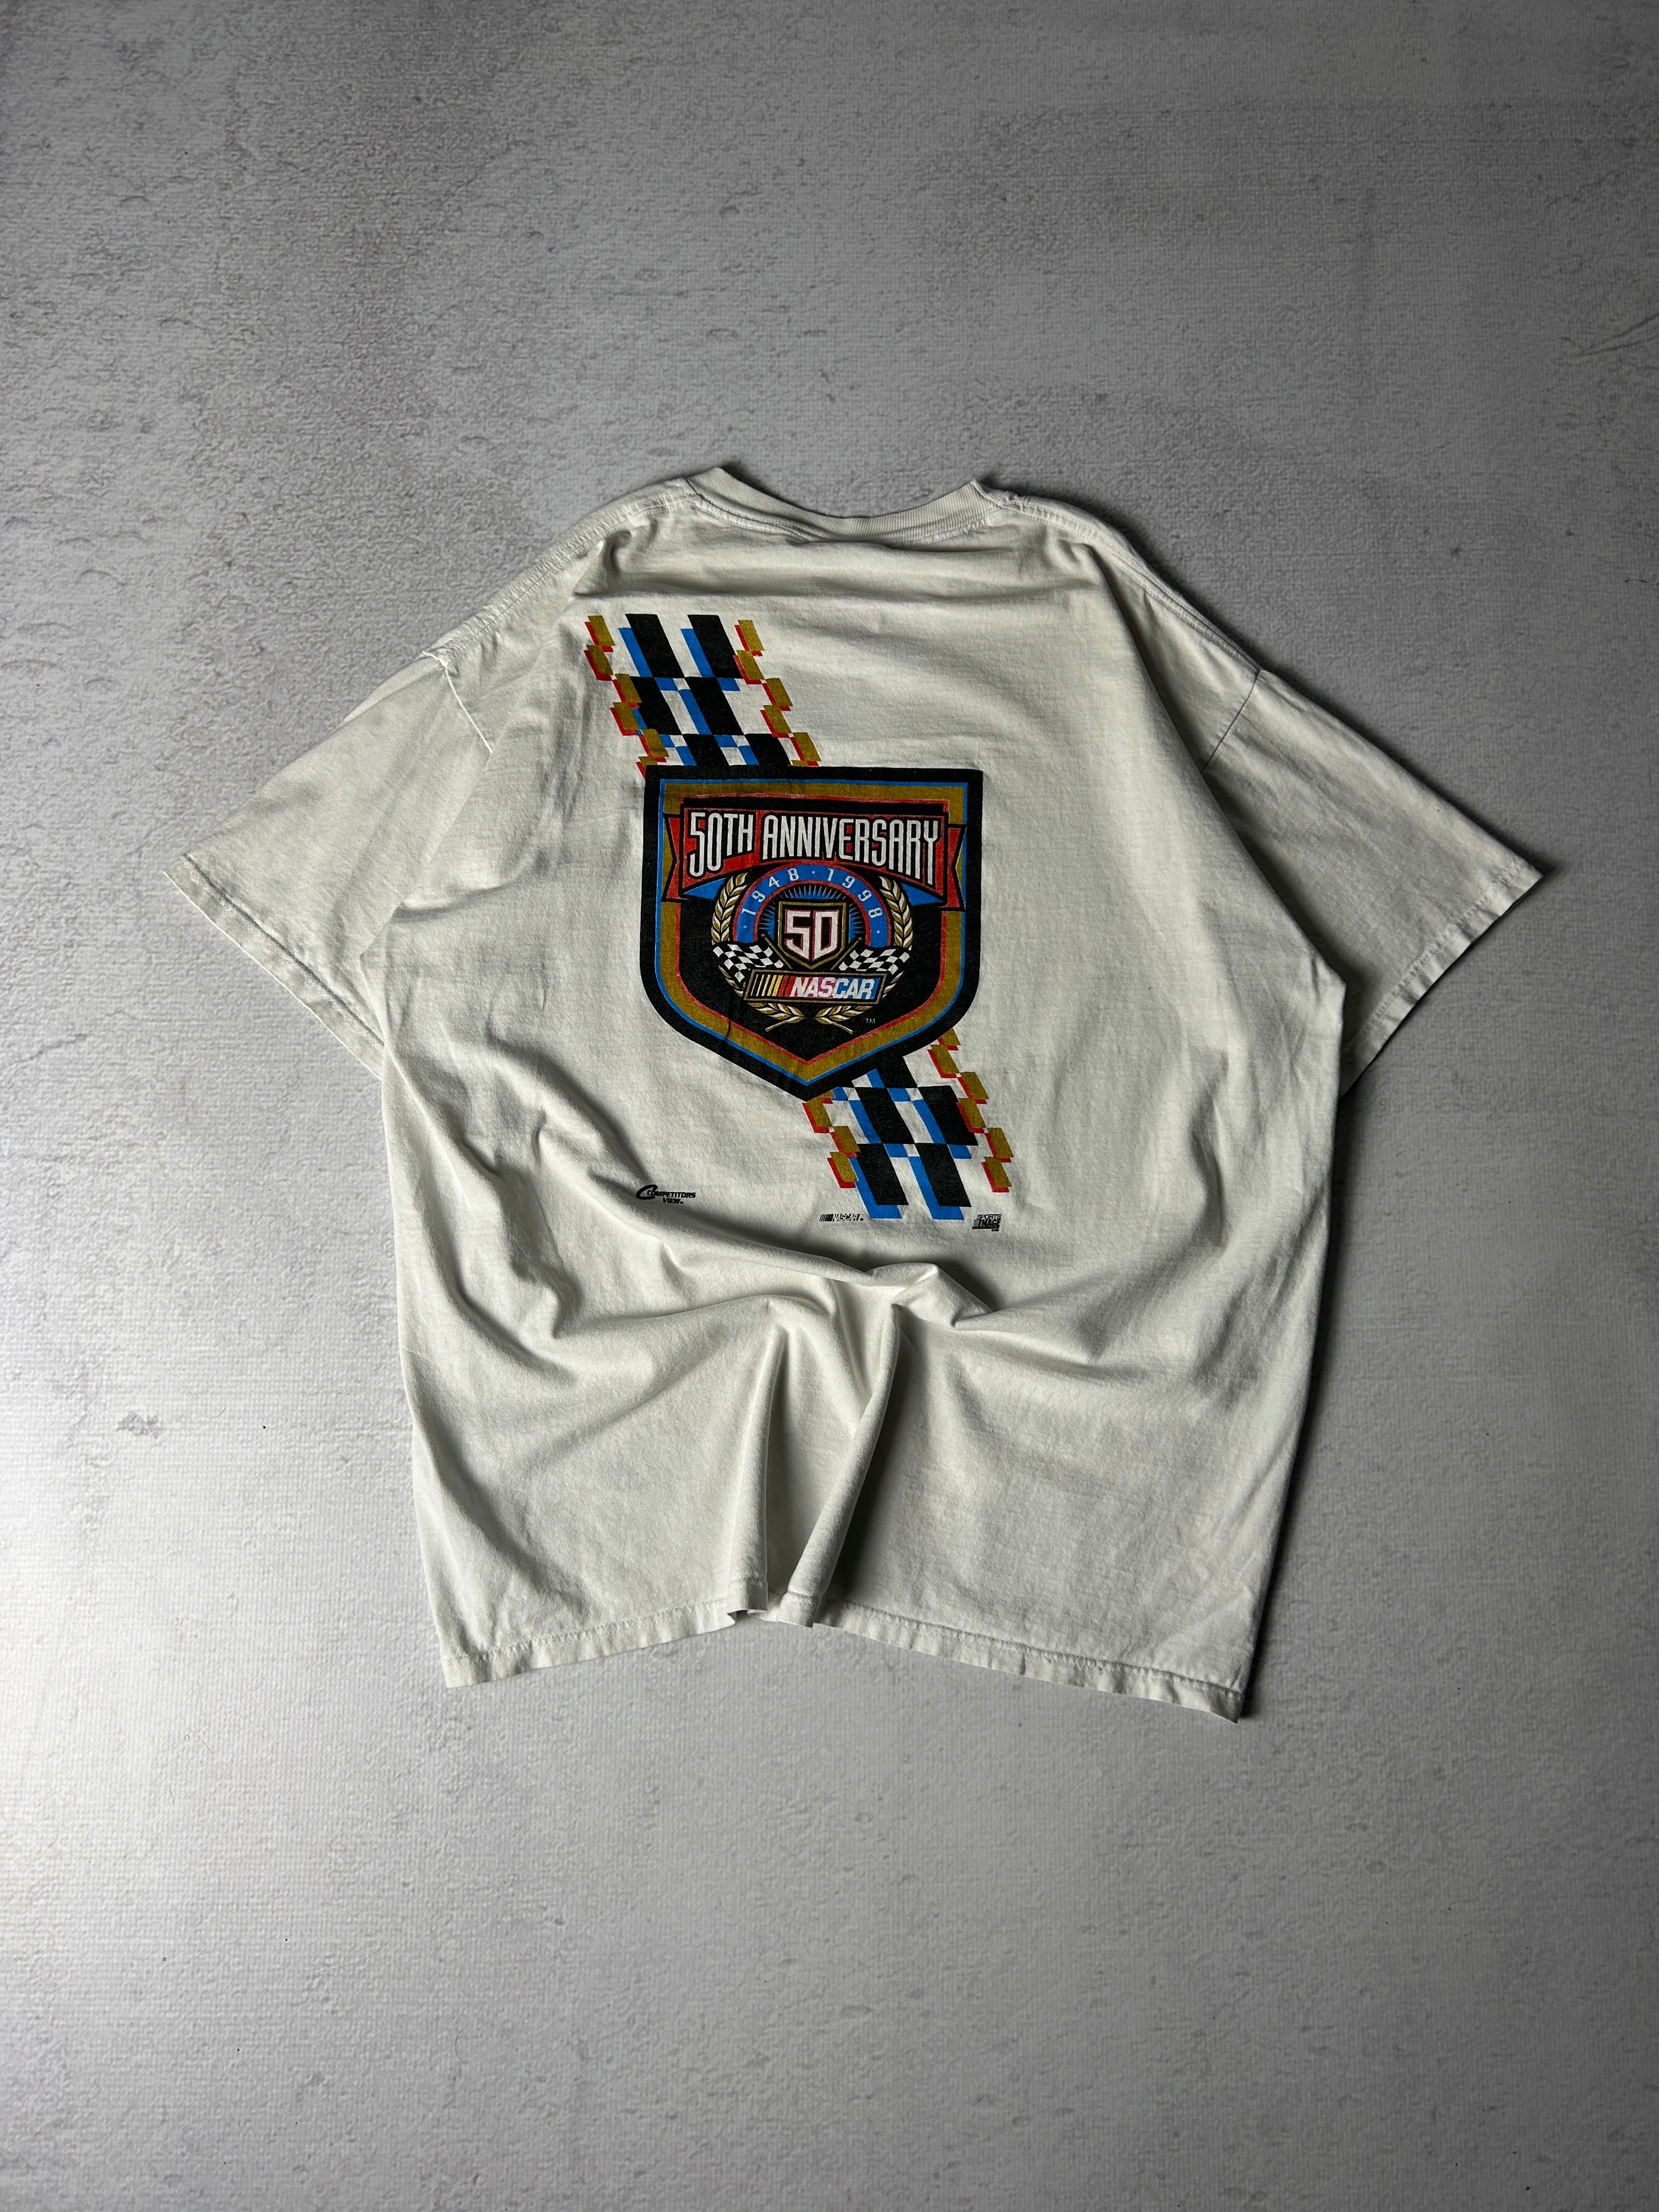 Vintage Nascar 50th Anniversary Graphic T-Shirt - Men's XL